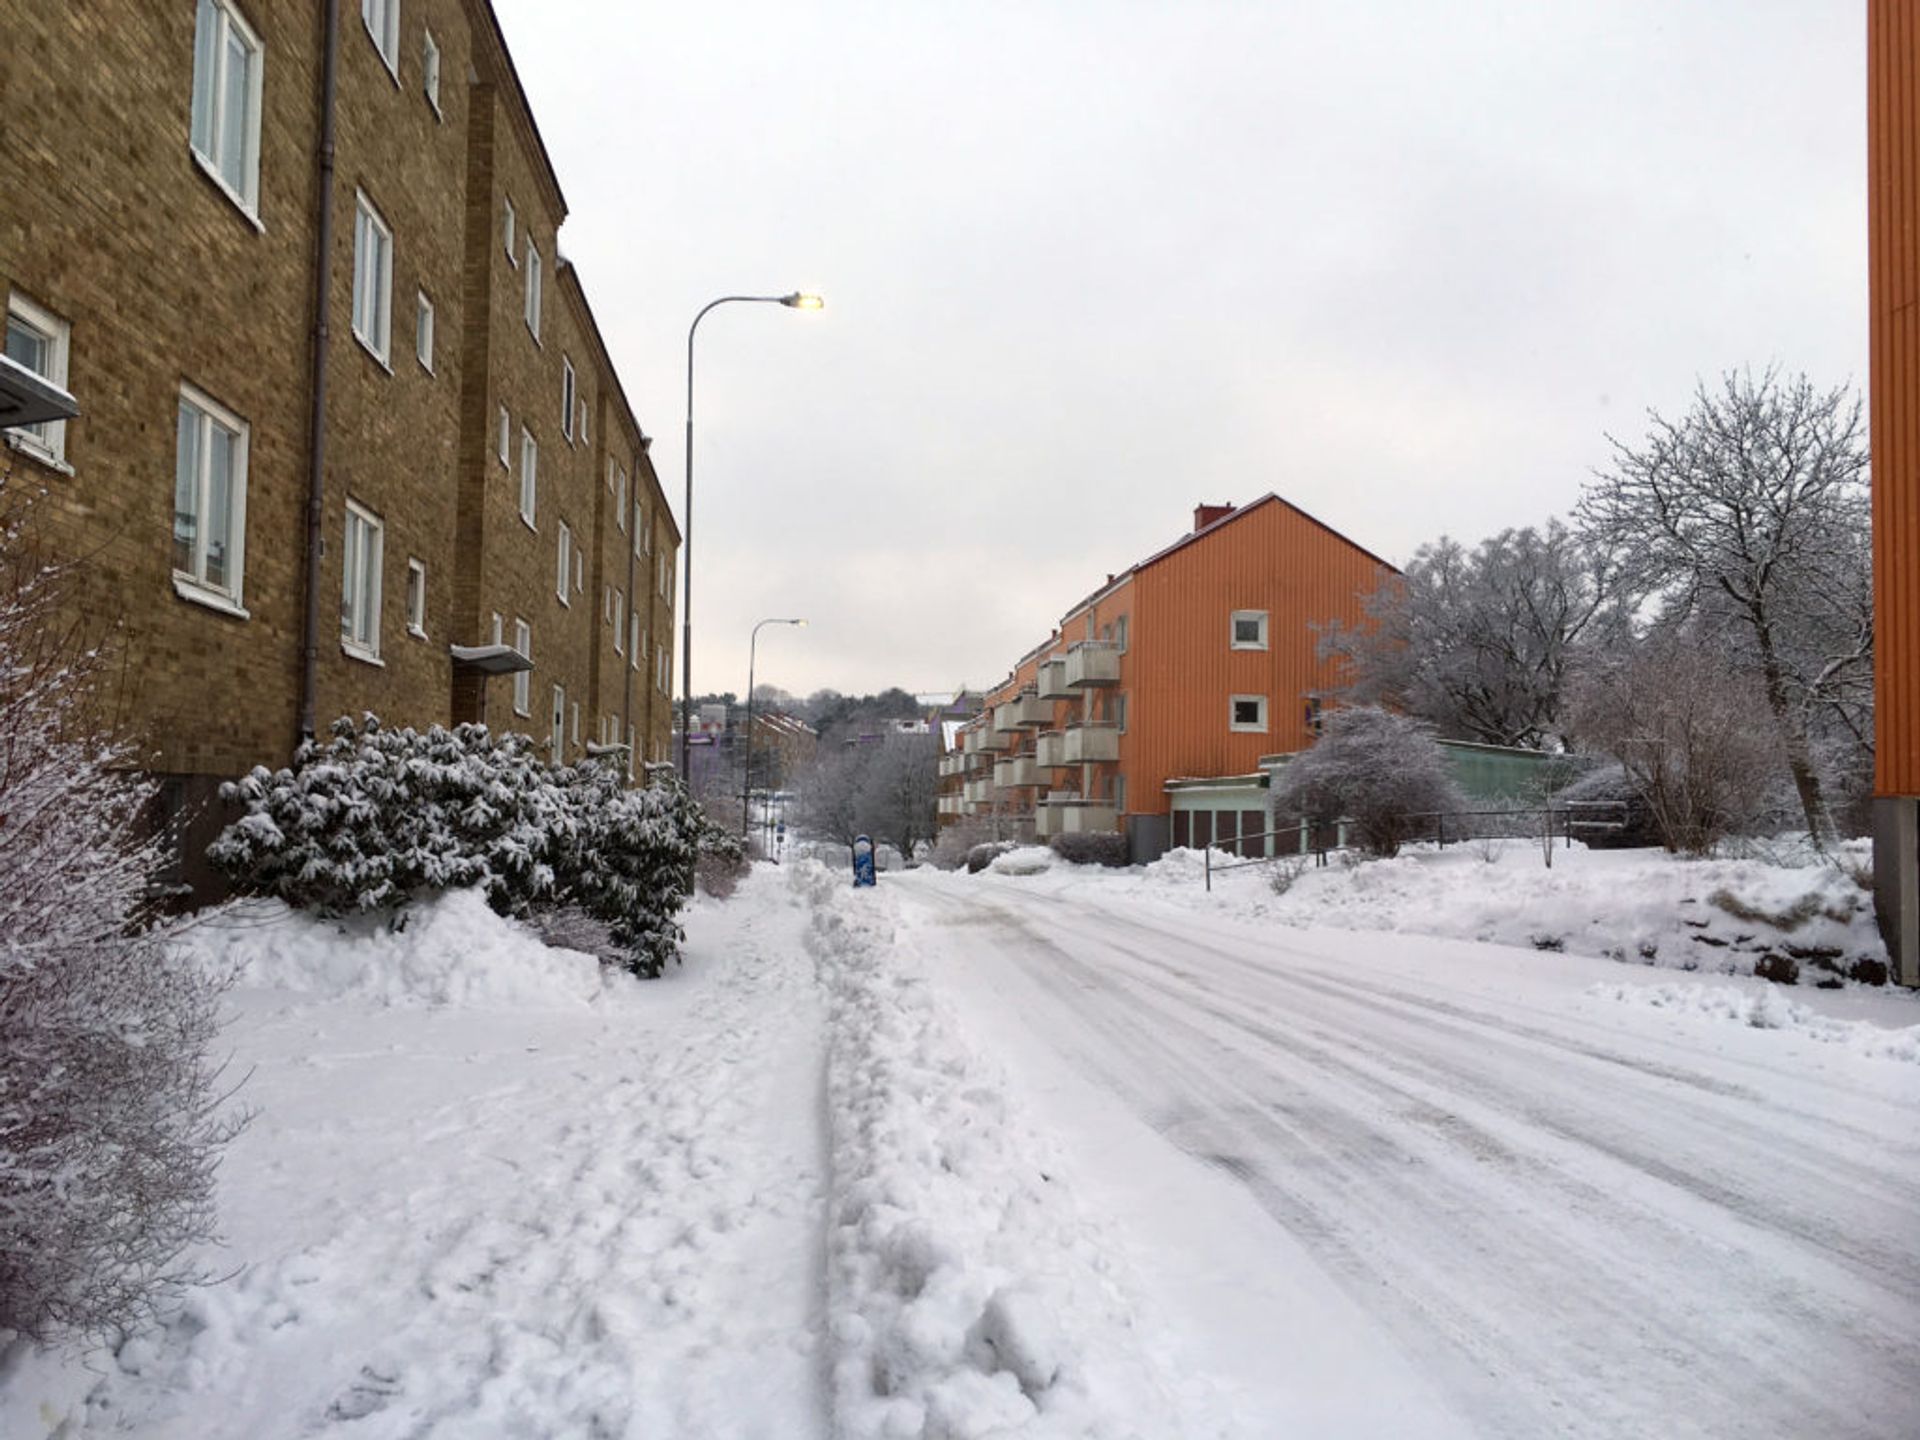 A snowy street through a residential area.